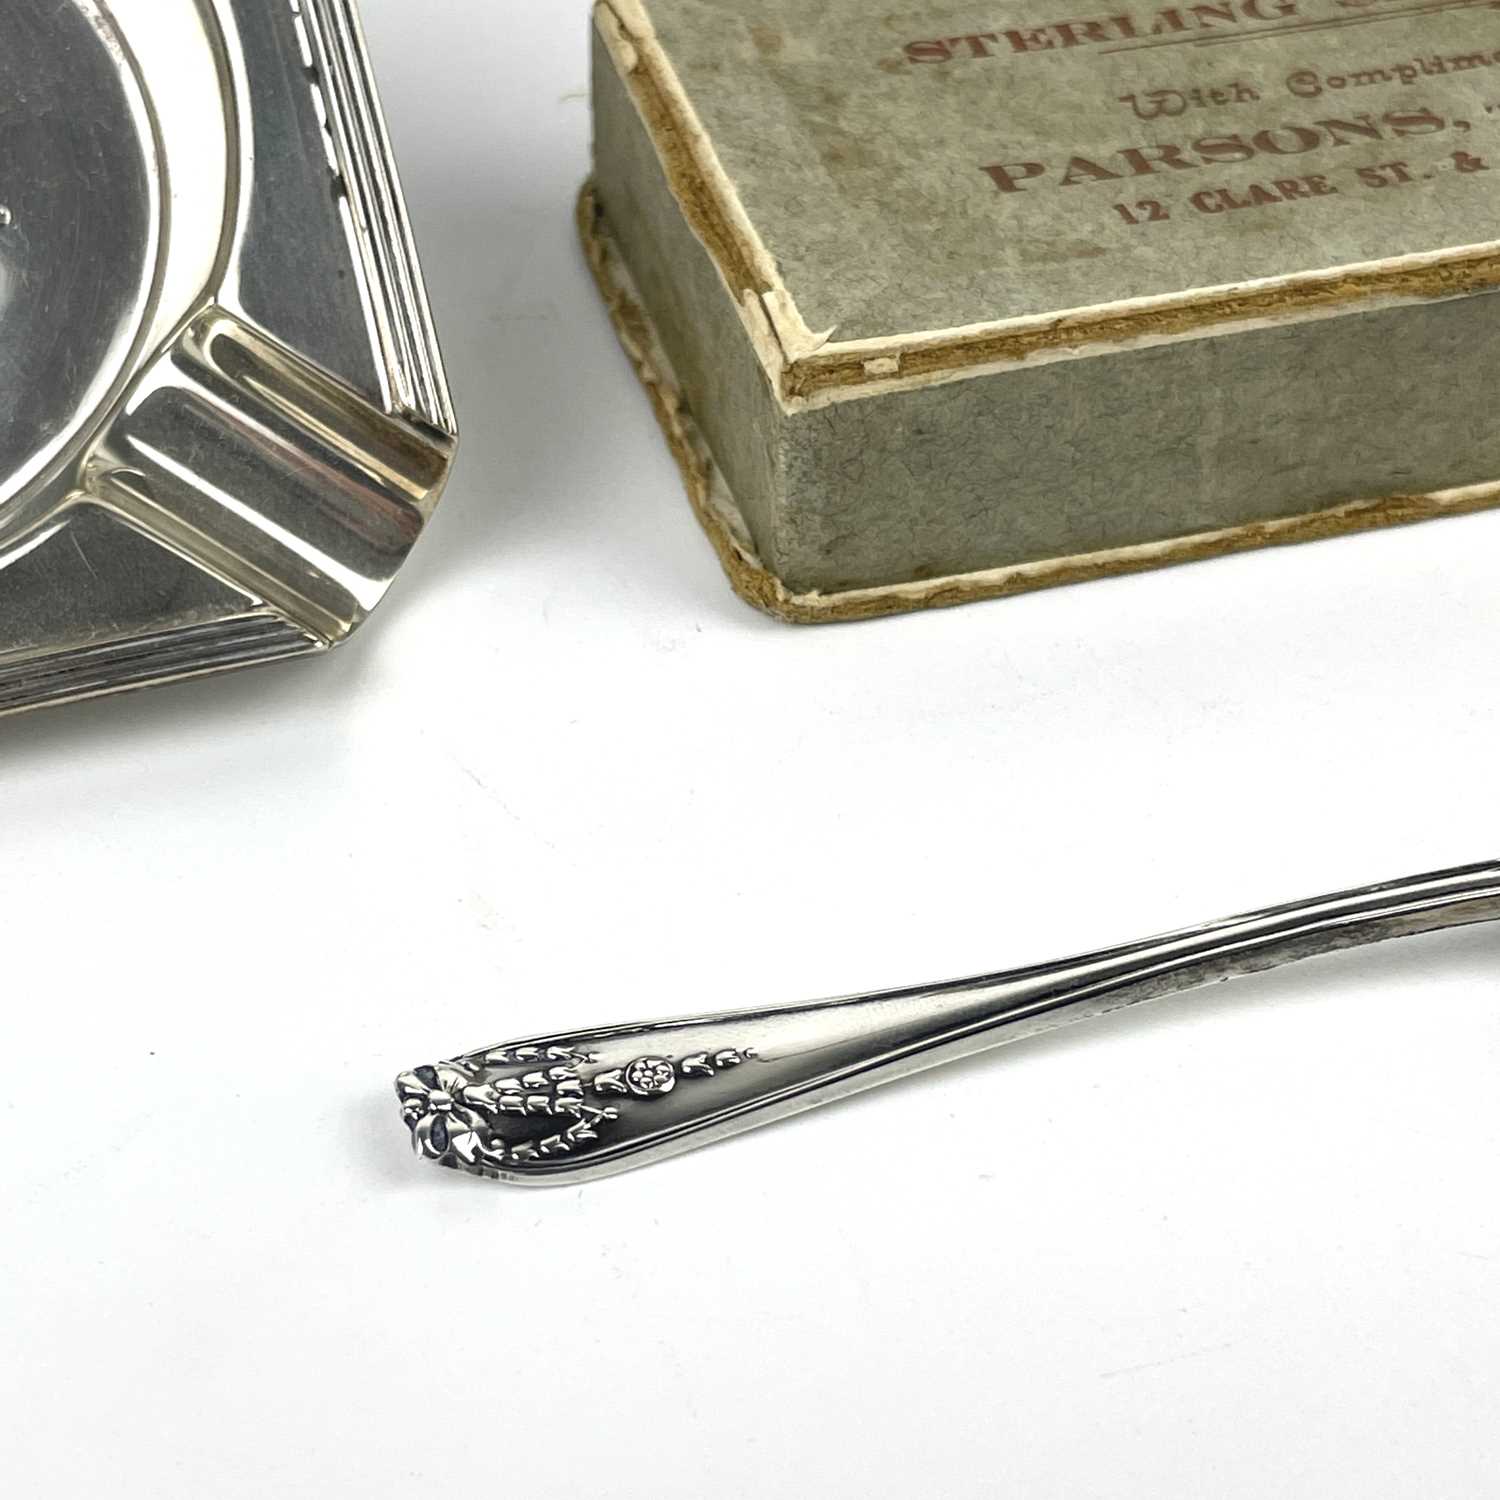 A George VI silver ashtray, a silver pepperette and a condiment spoon. - Image 5 of 6